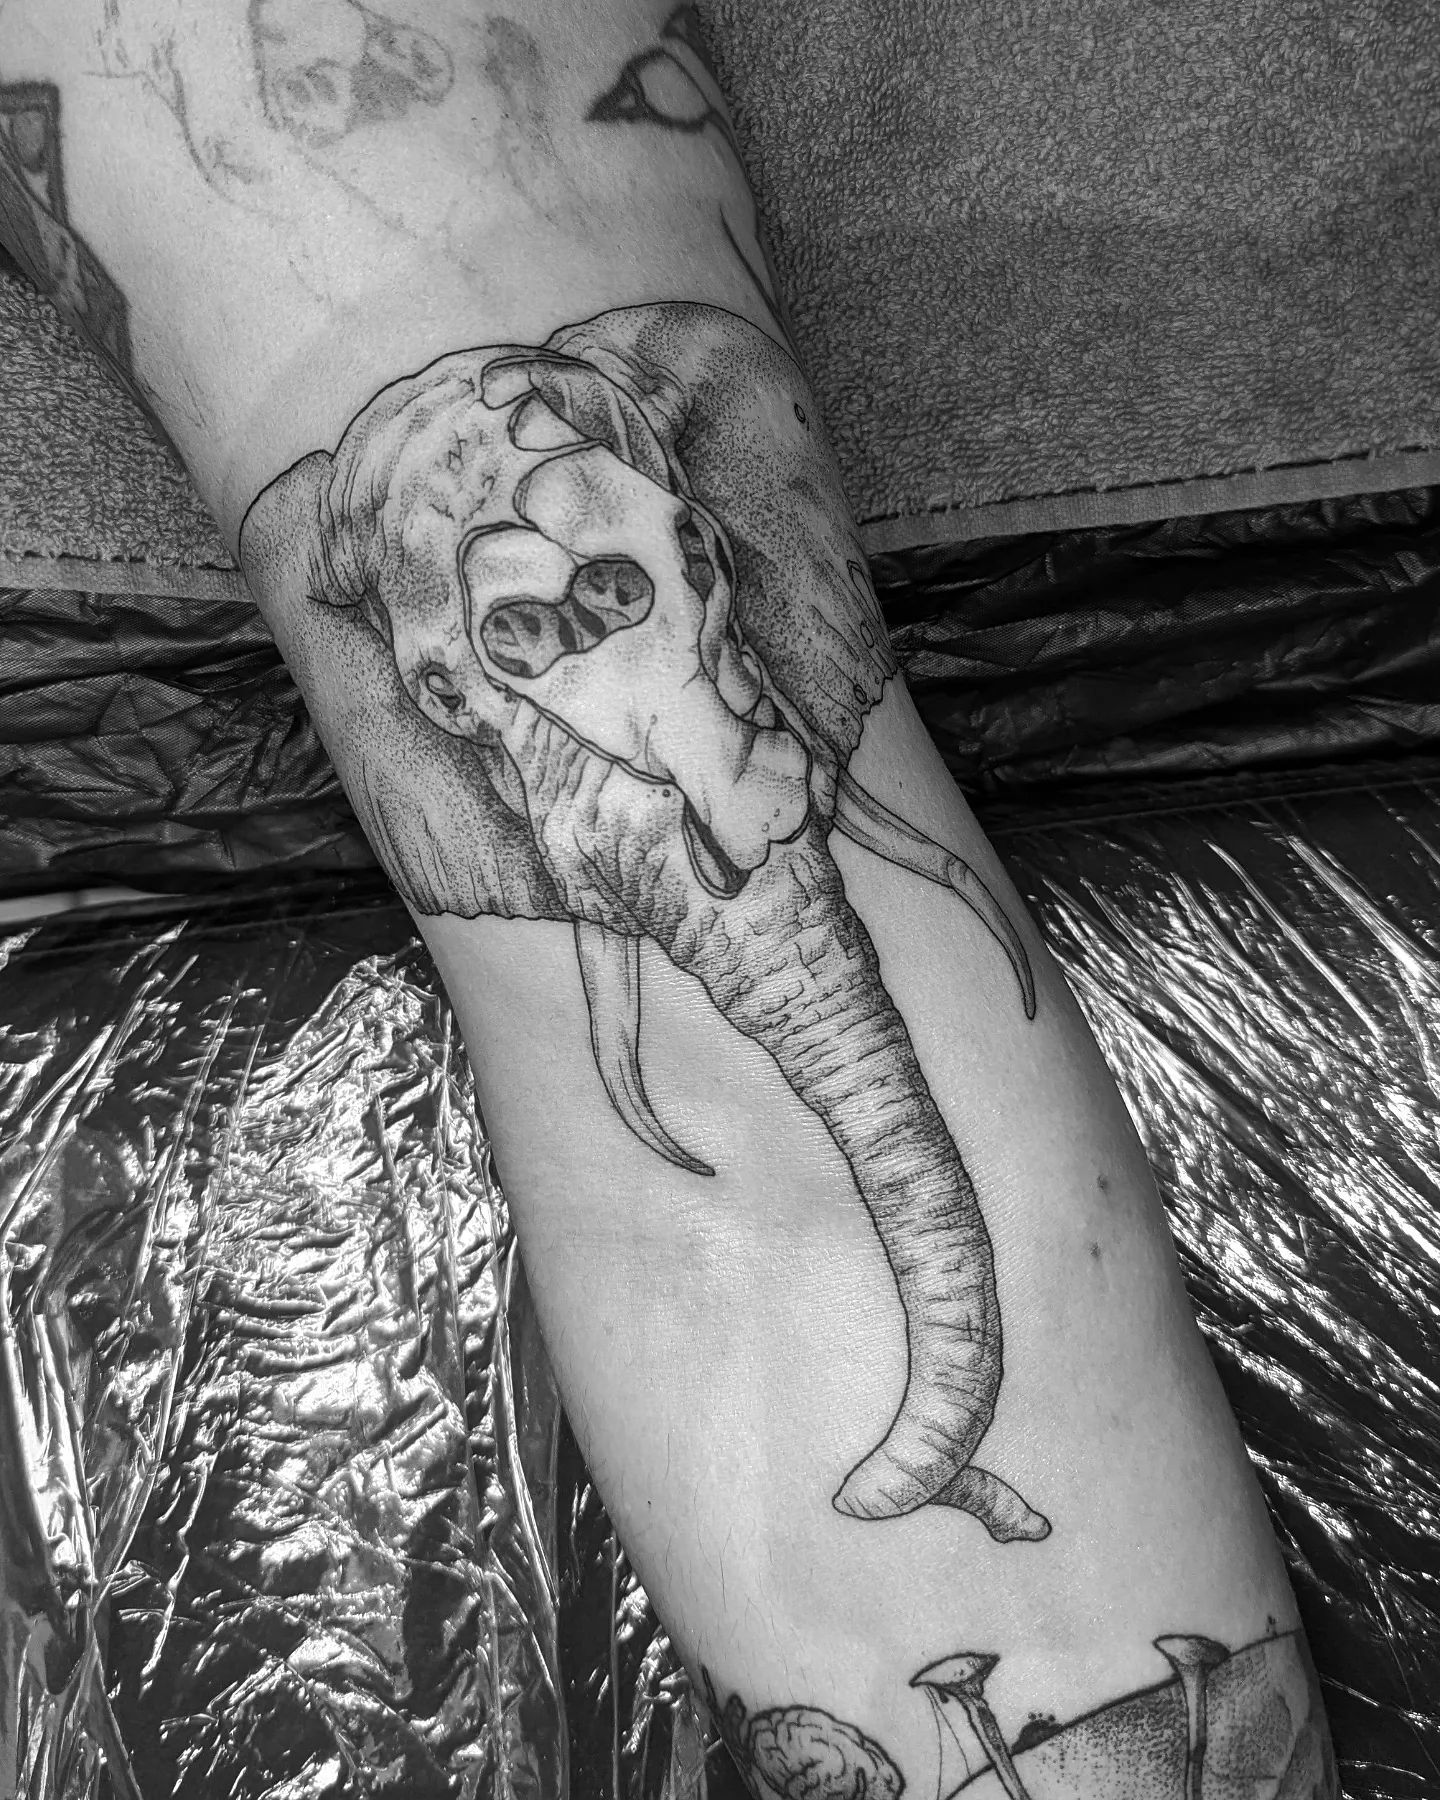 Dead Elephant
.
#tattooartist #tattoodesign #girlswithtattoos #tattooartwork #ta